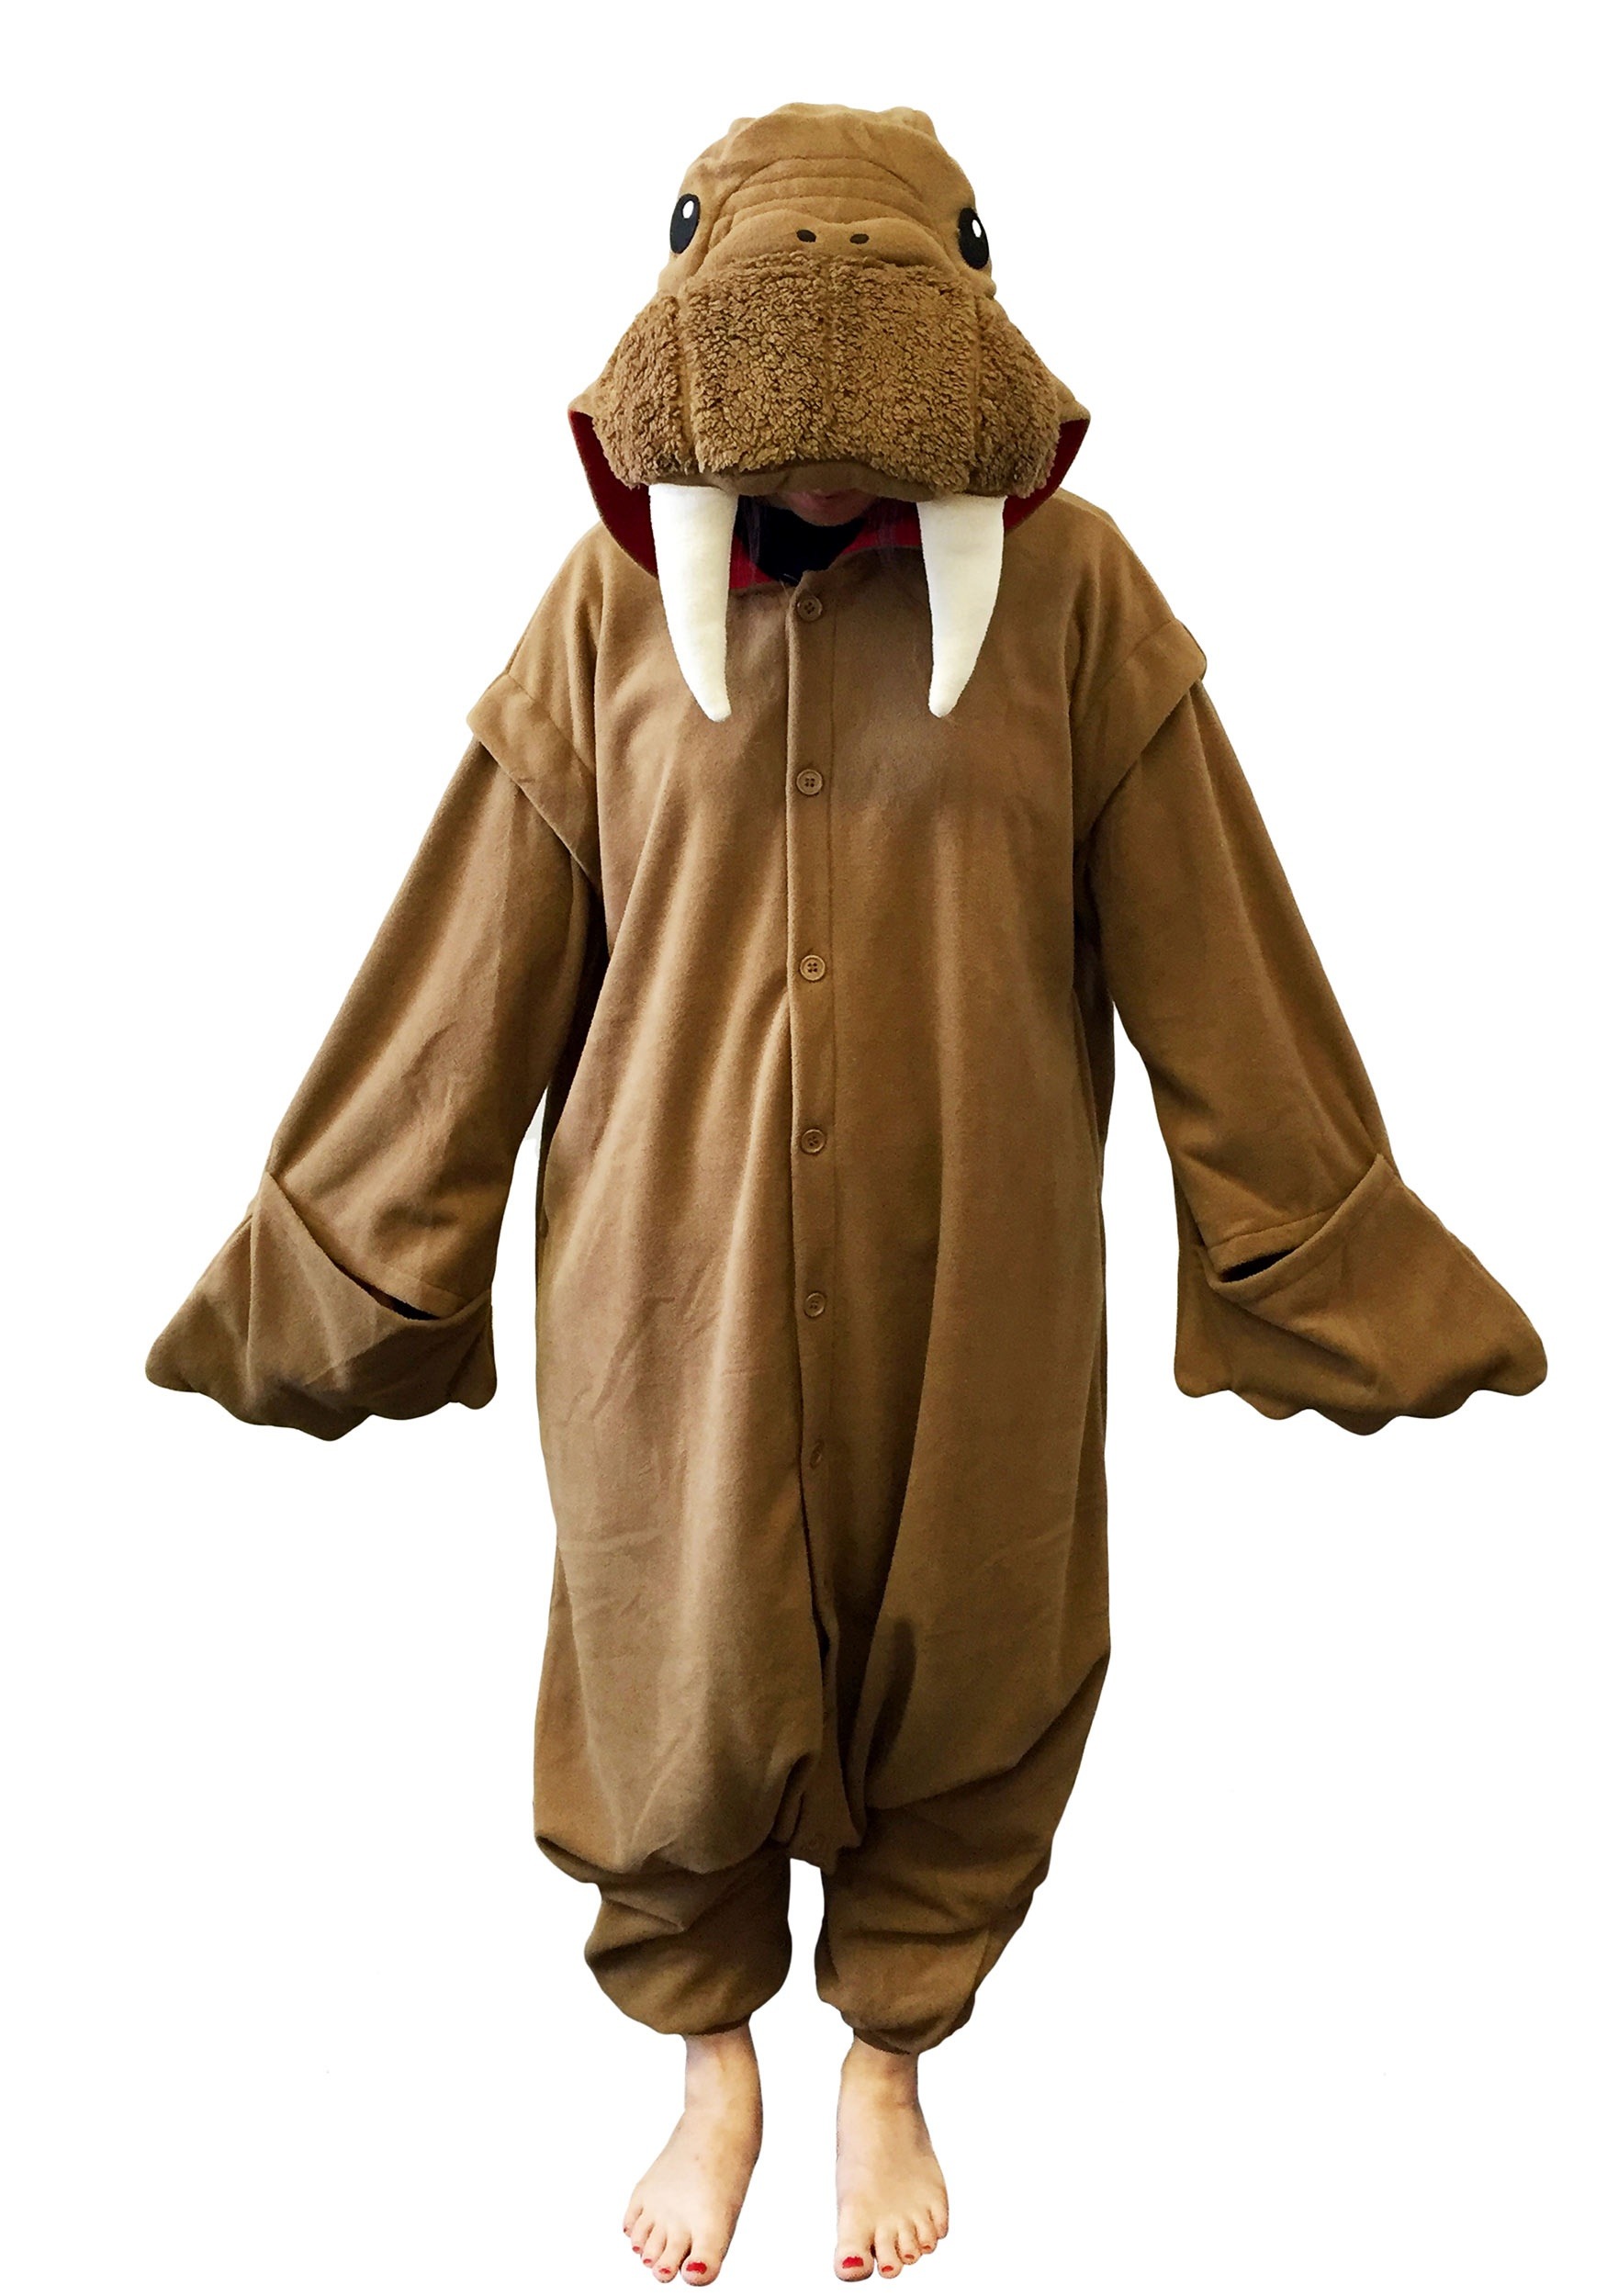 Walrus costume